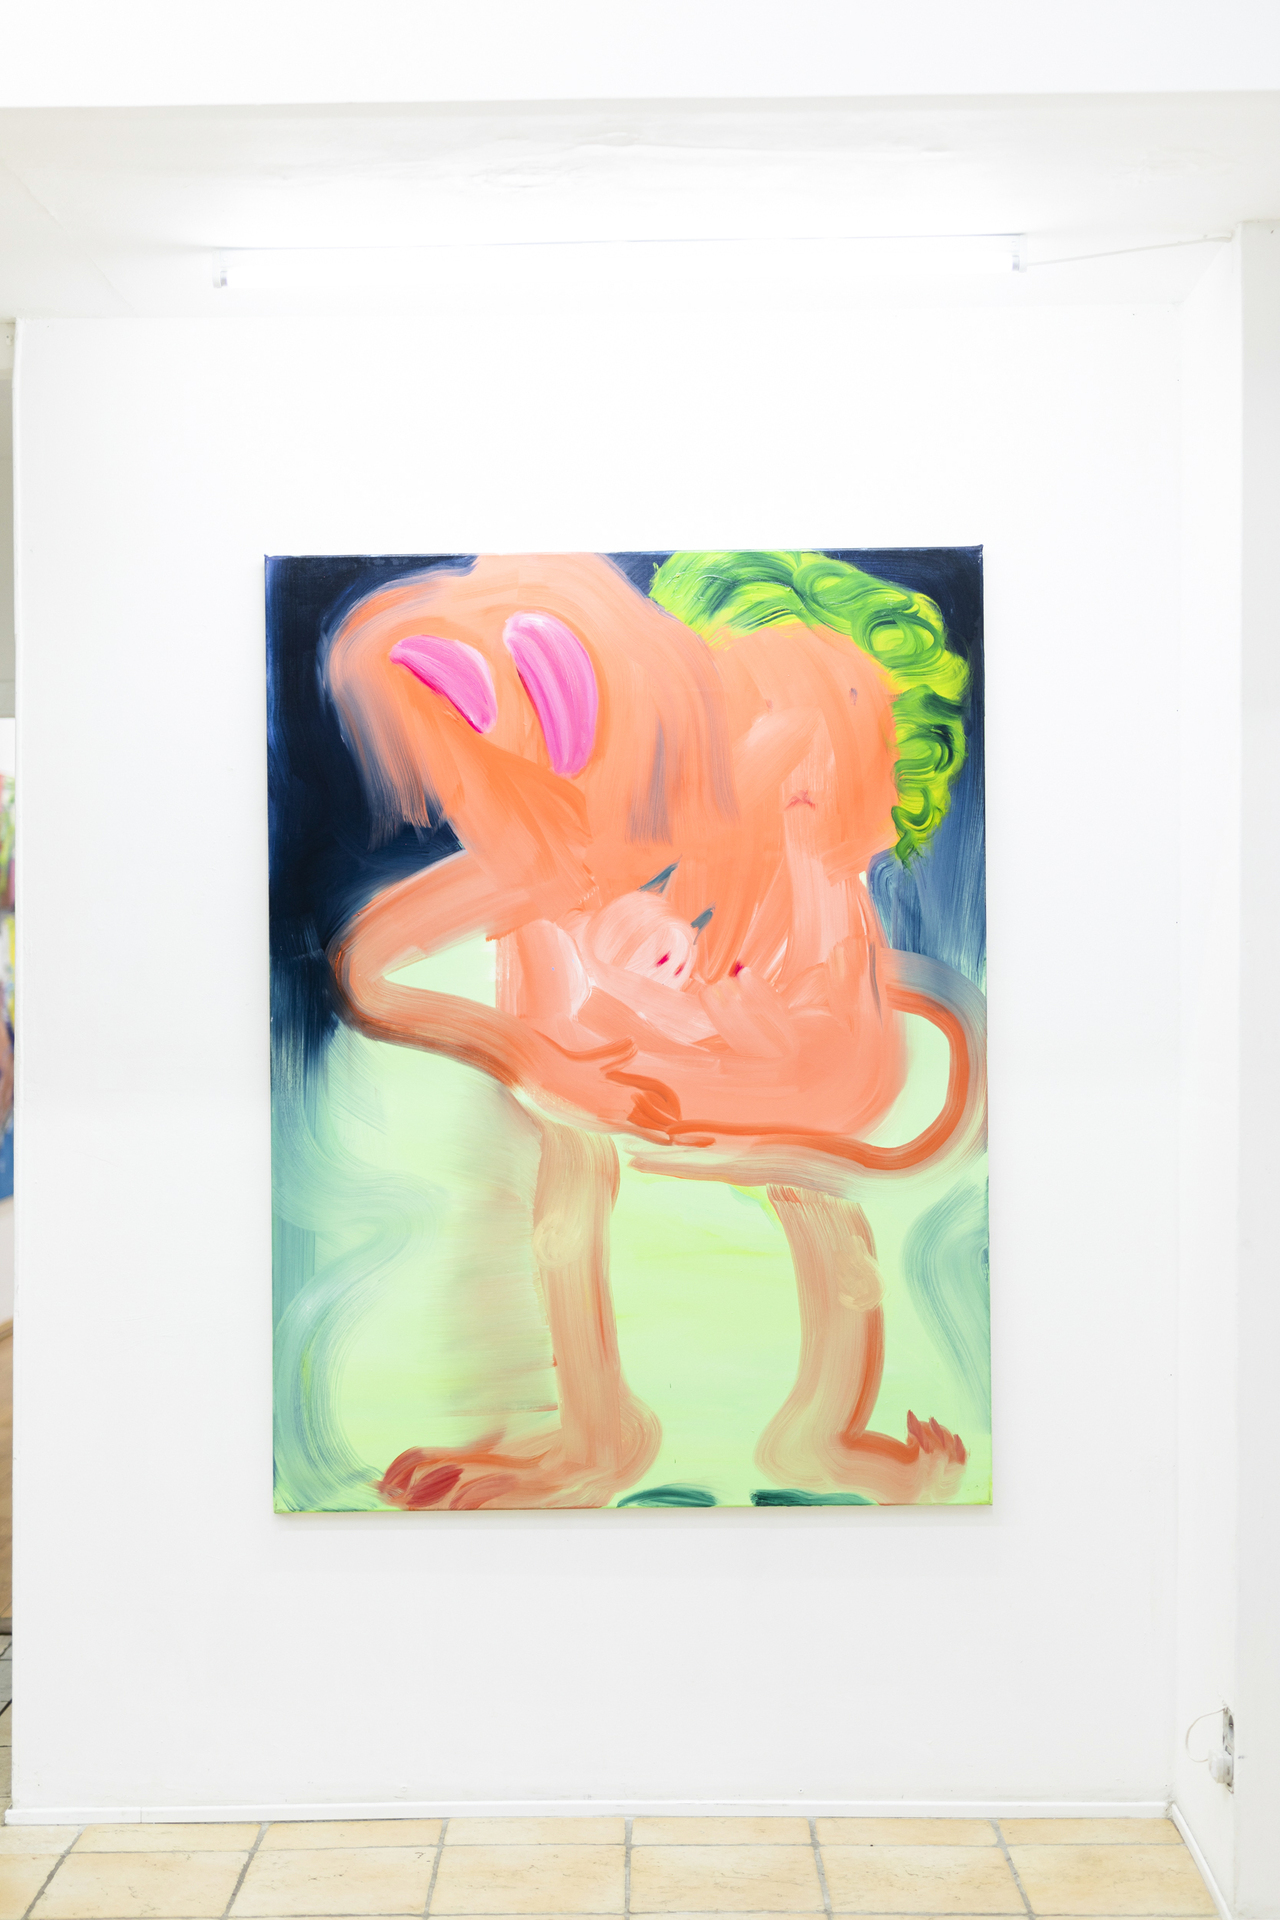 Aneta Kajzer, We Belong Together, 2020, oil on canvas, 160 x 100 cm